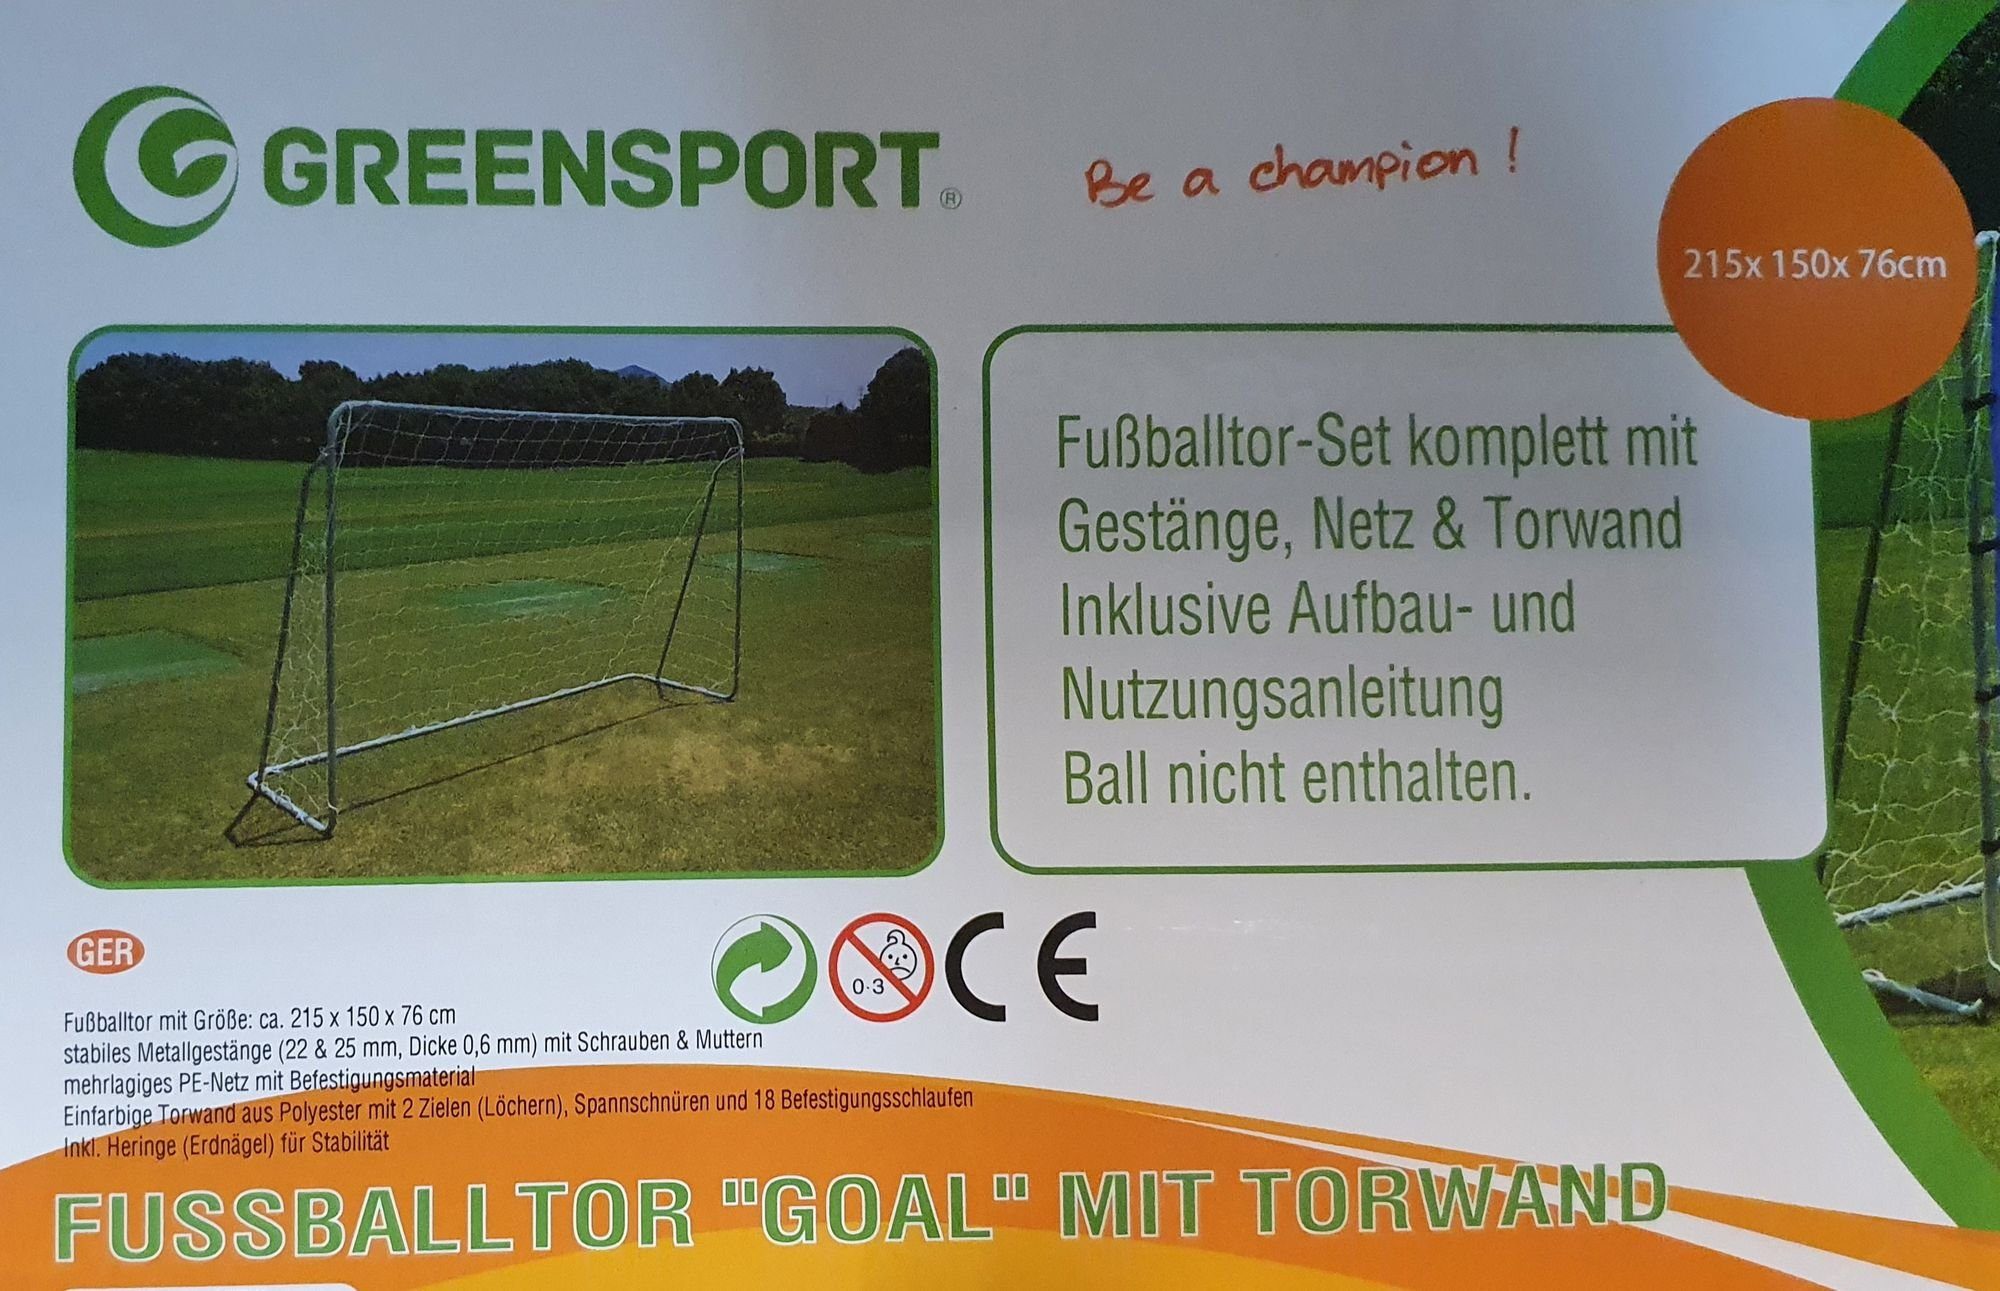 Greensport Fußballtor 76 cm mit Fußballtor x x Goal Torwand 150 215